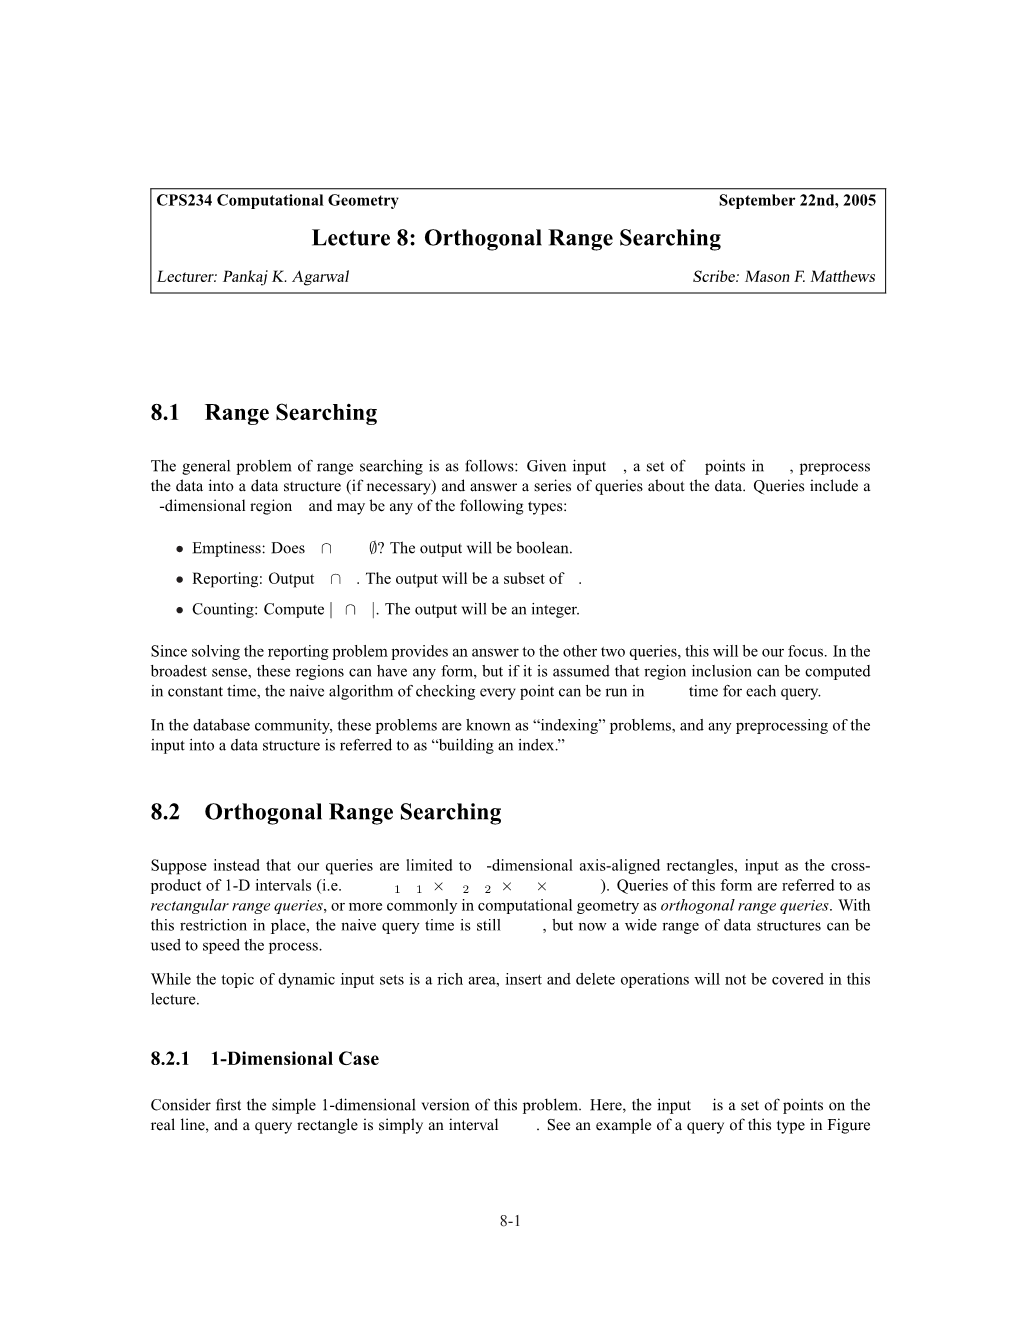 Lecture 8: Orthogonal Range Searching 8.1 Range Searching 8.2